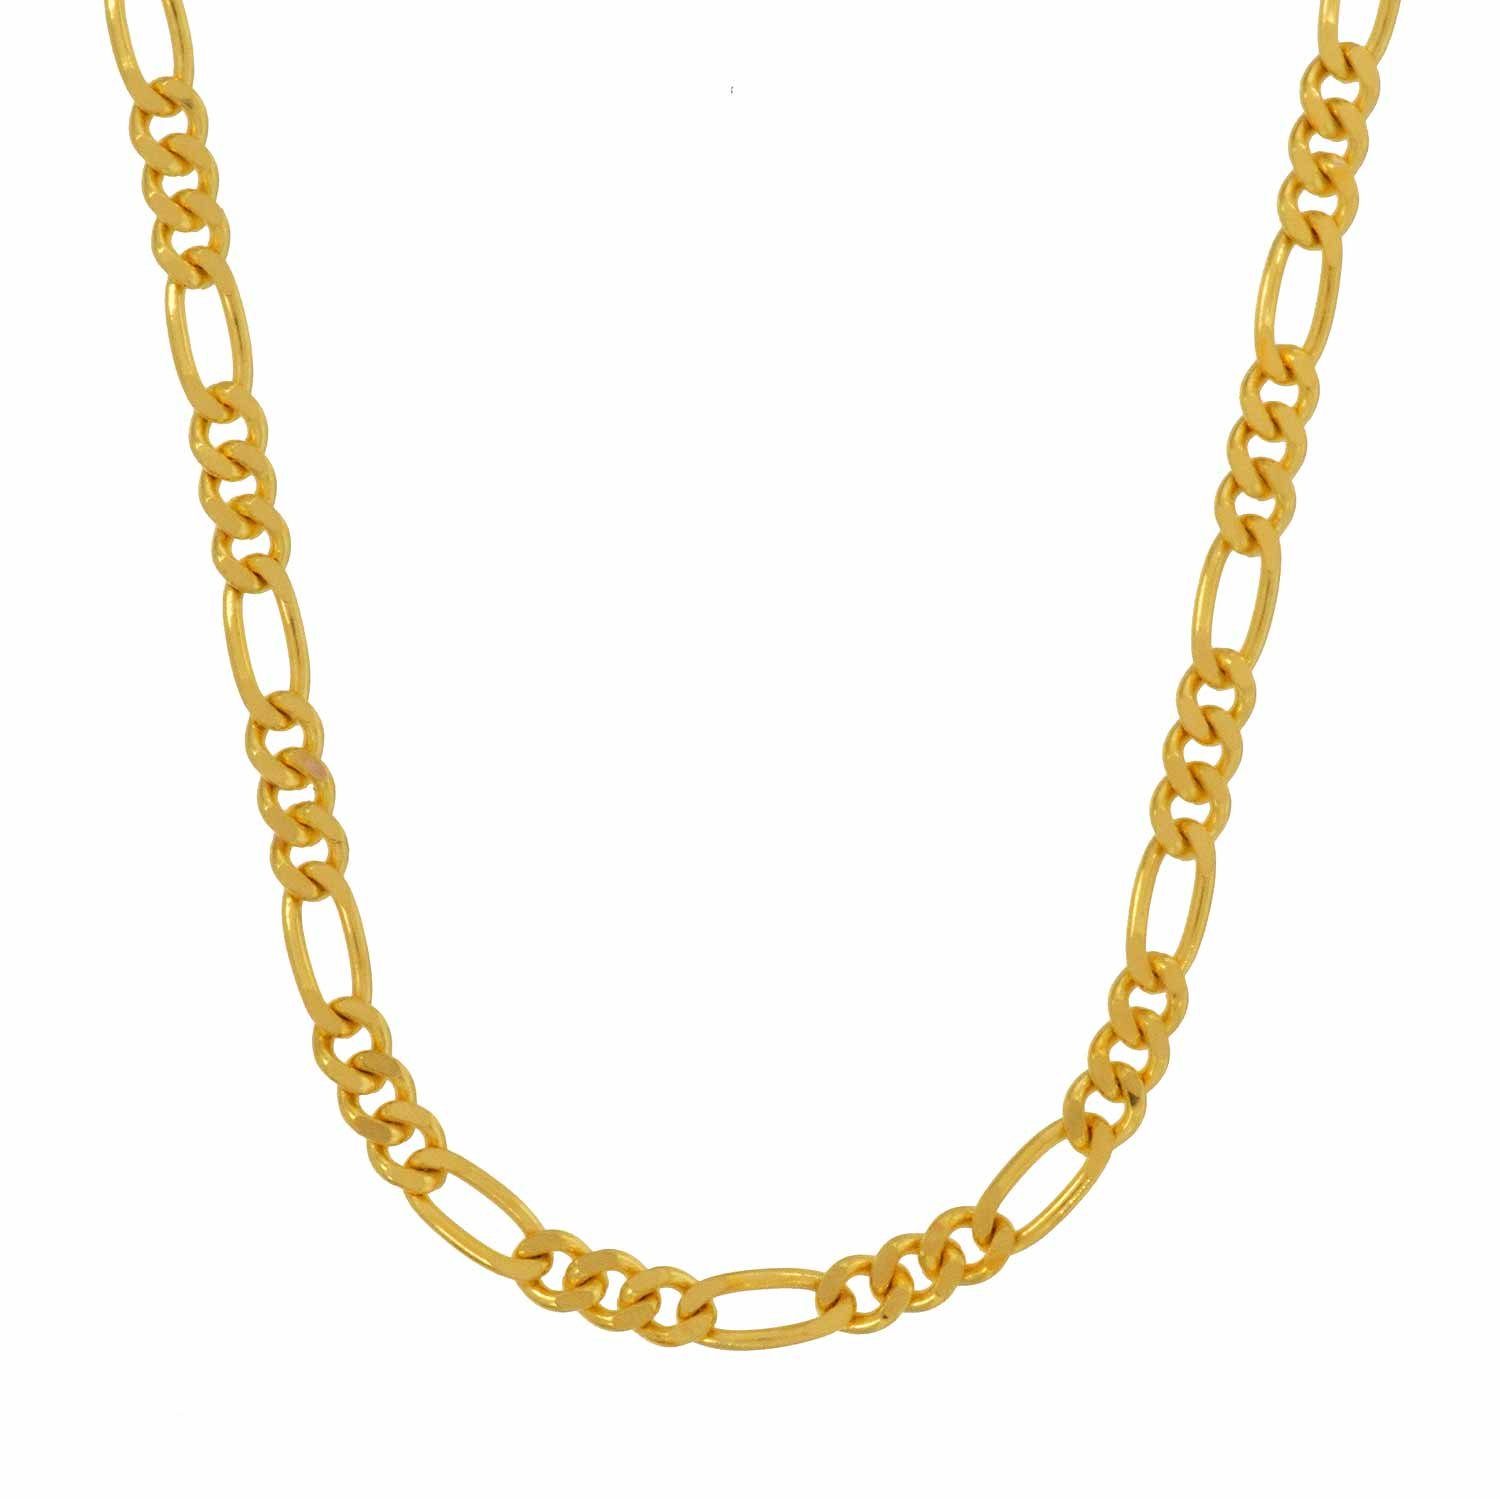 HOPLO Goldkette Figarokette 585 - 14 Karat Gold 2,2 mm 60 cm Halskette  Goldkette, Made in Germany